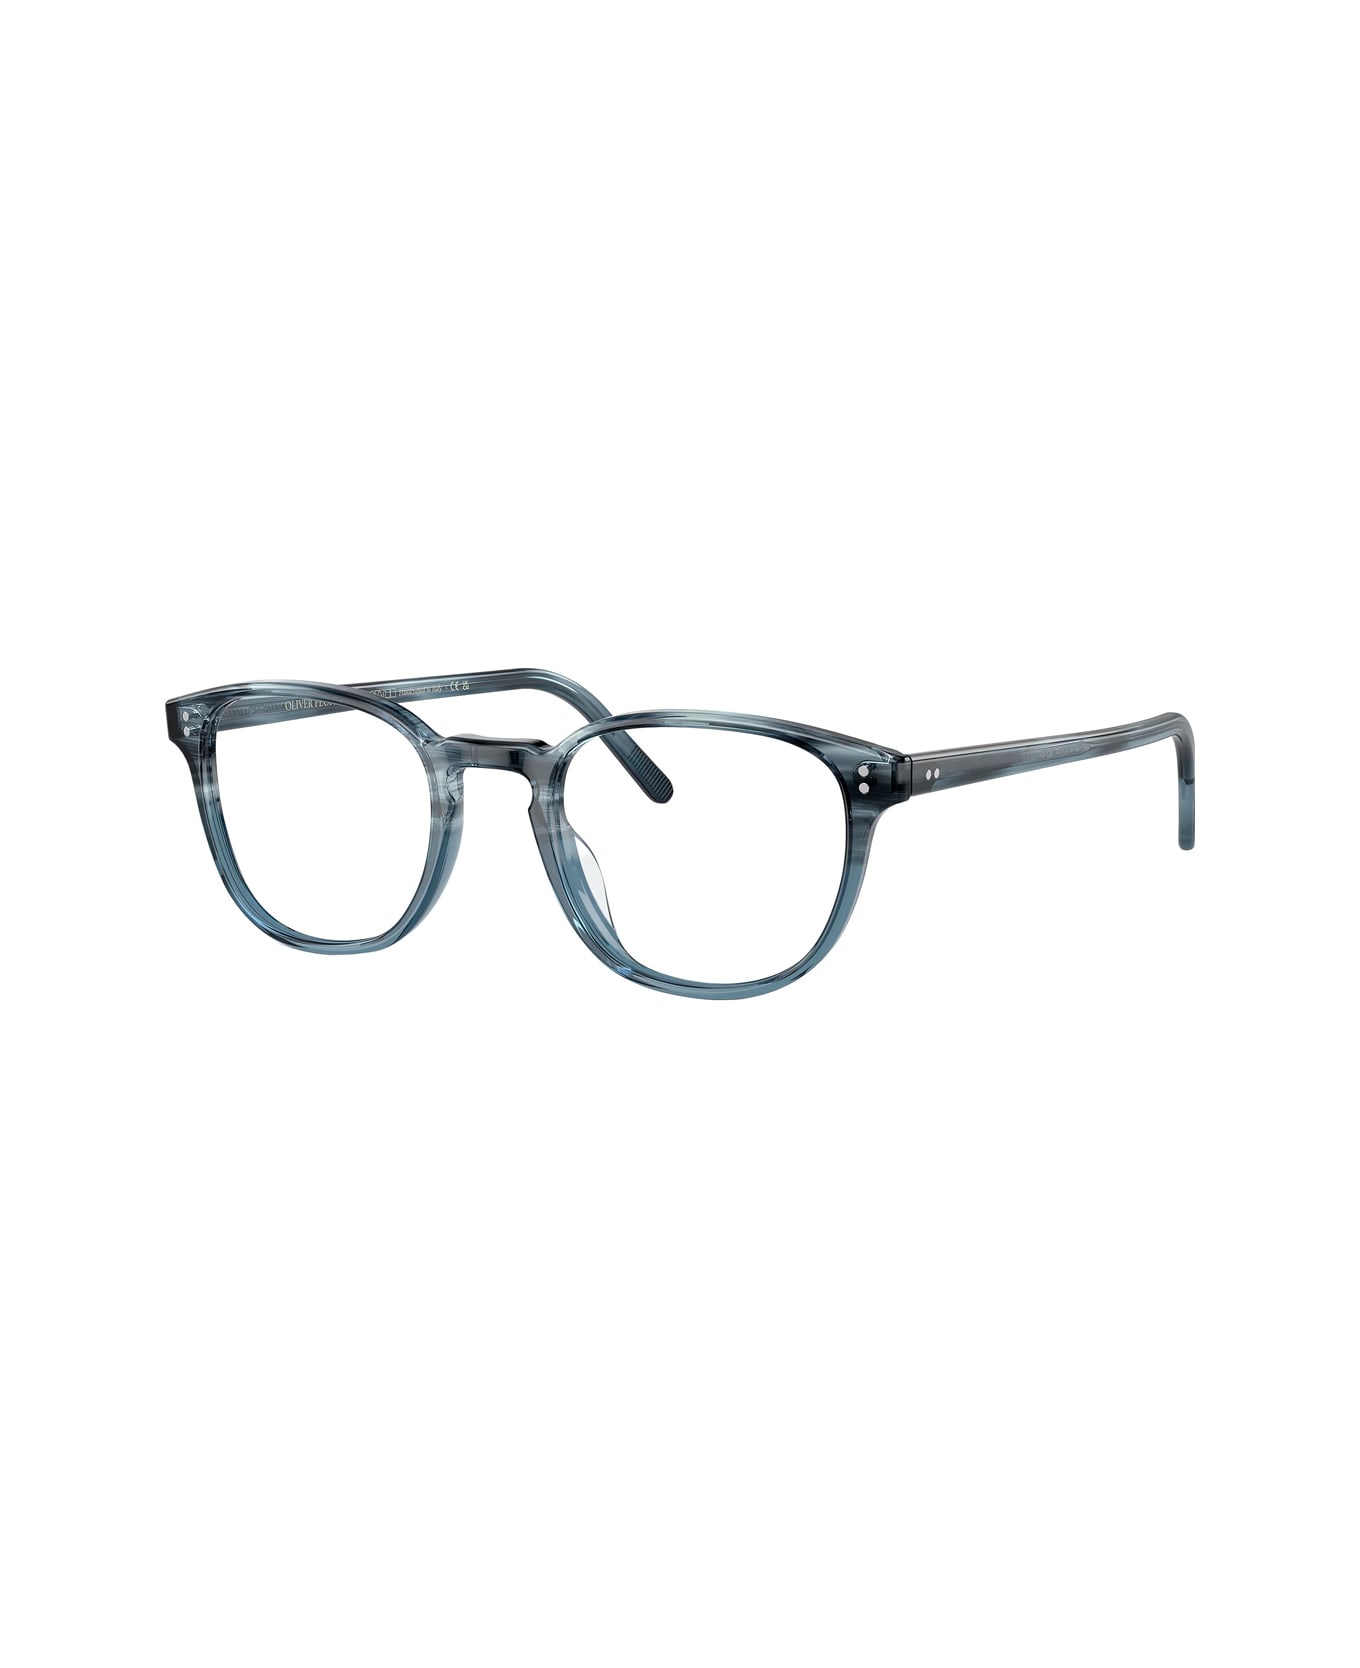 Oliver Peoples Ov5219 - Fairmont 1730 Glasses - Blu